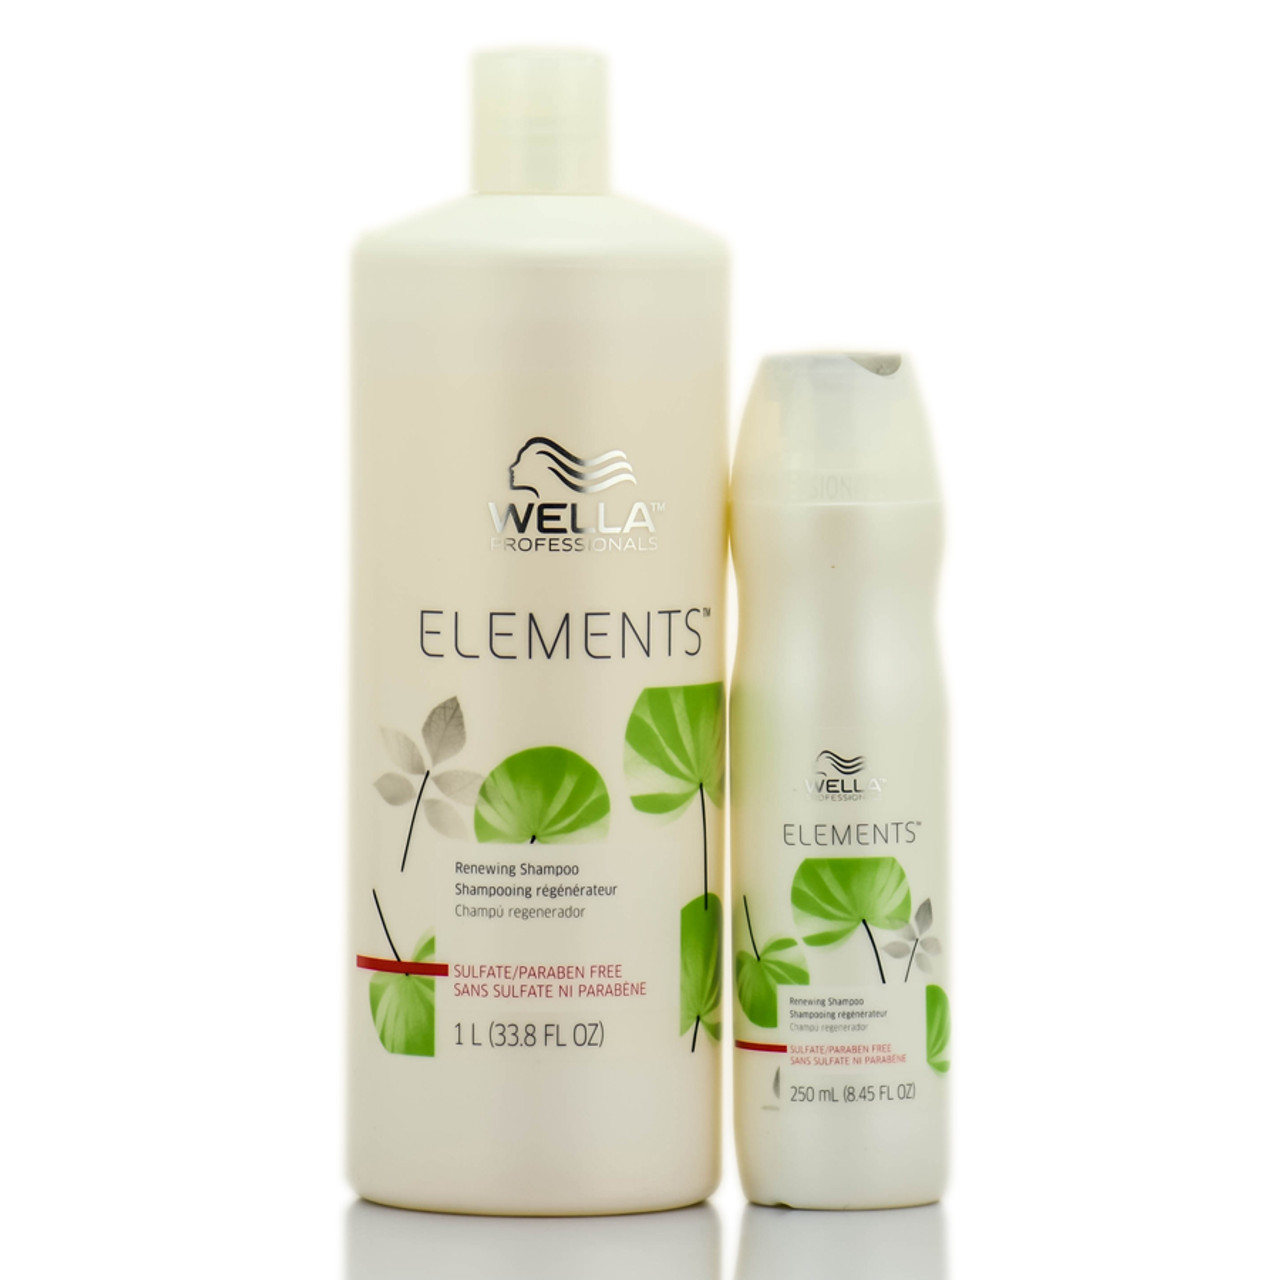 Wella Element Shampoo SleekShop.com